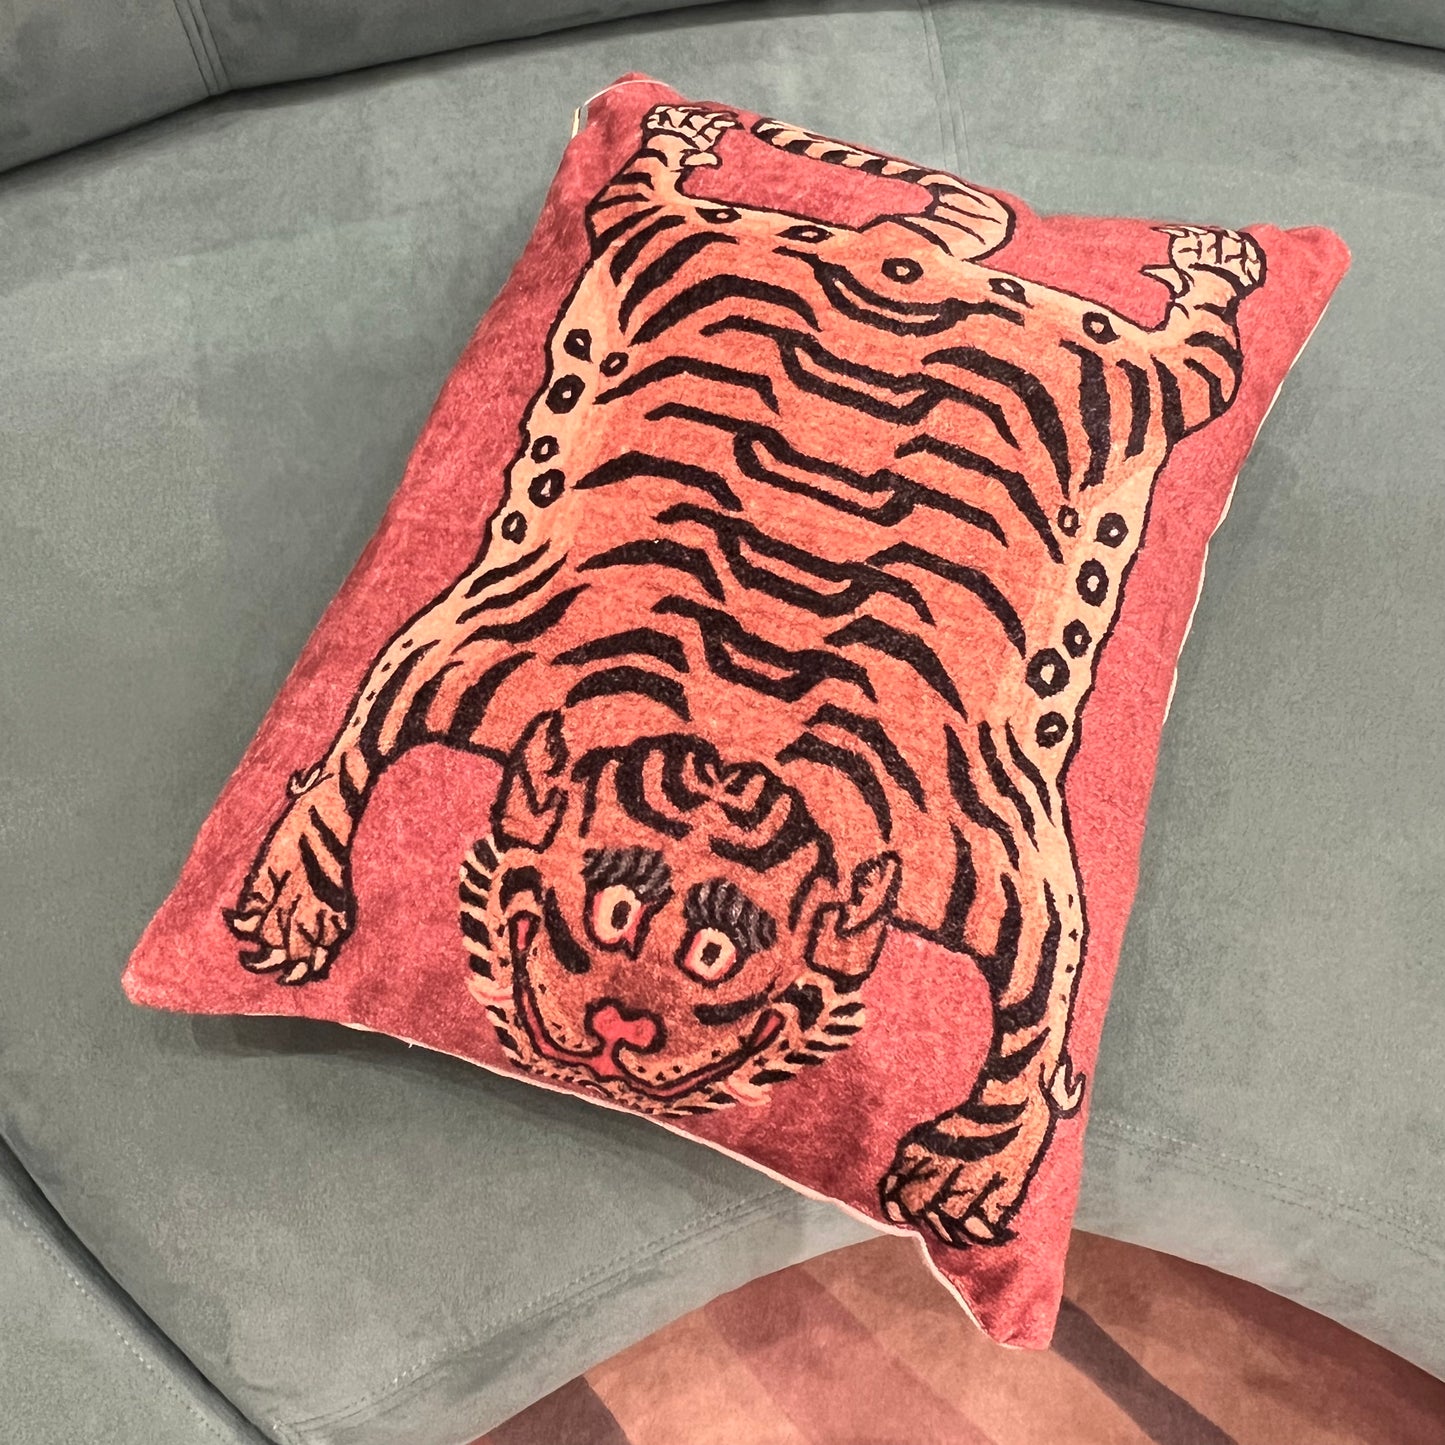 Tibetan Tiger Cushion 12"x 16"